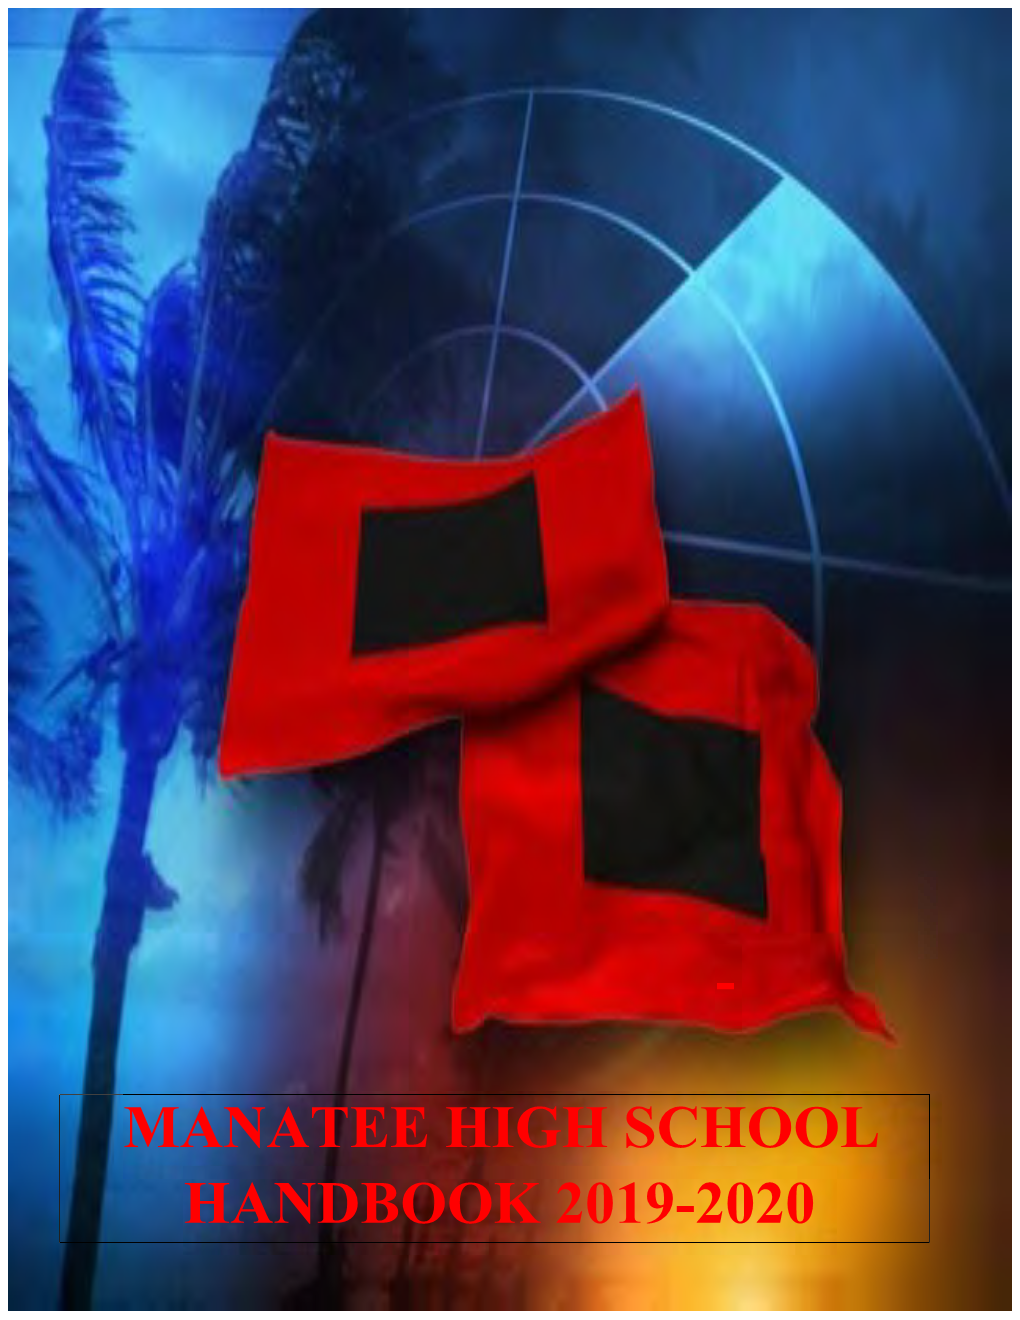 Manatee High School Handbook 2019-2020